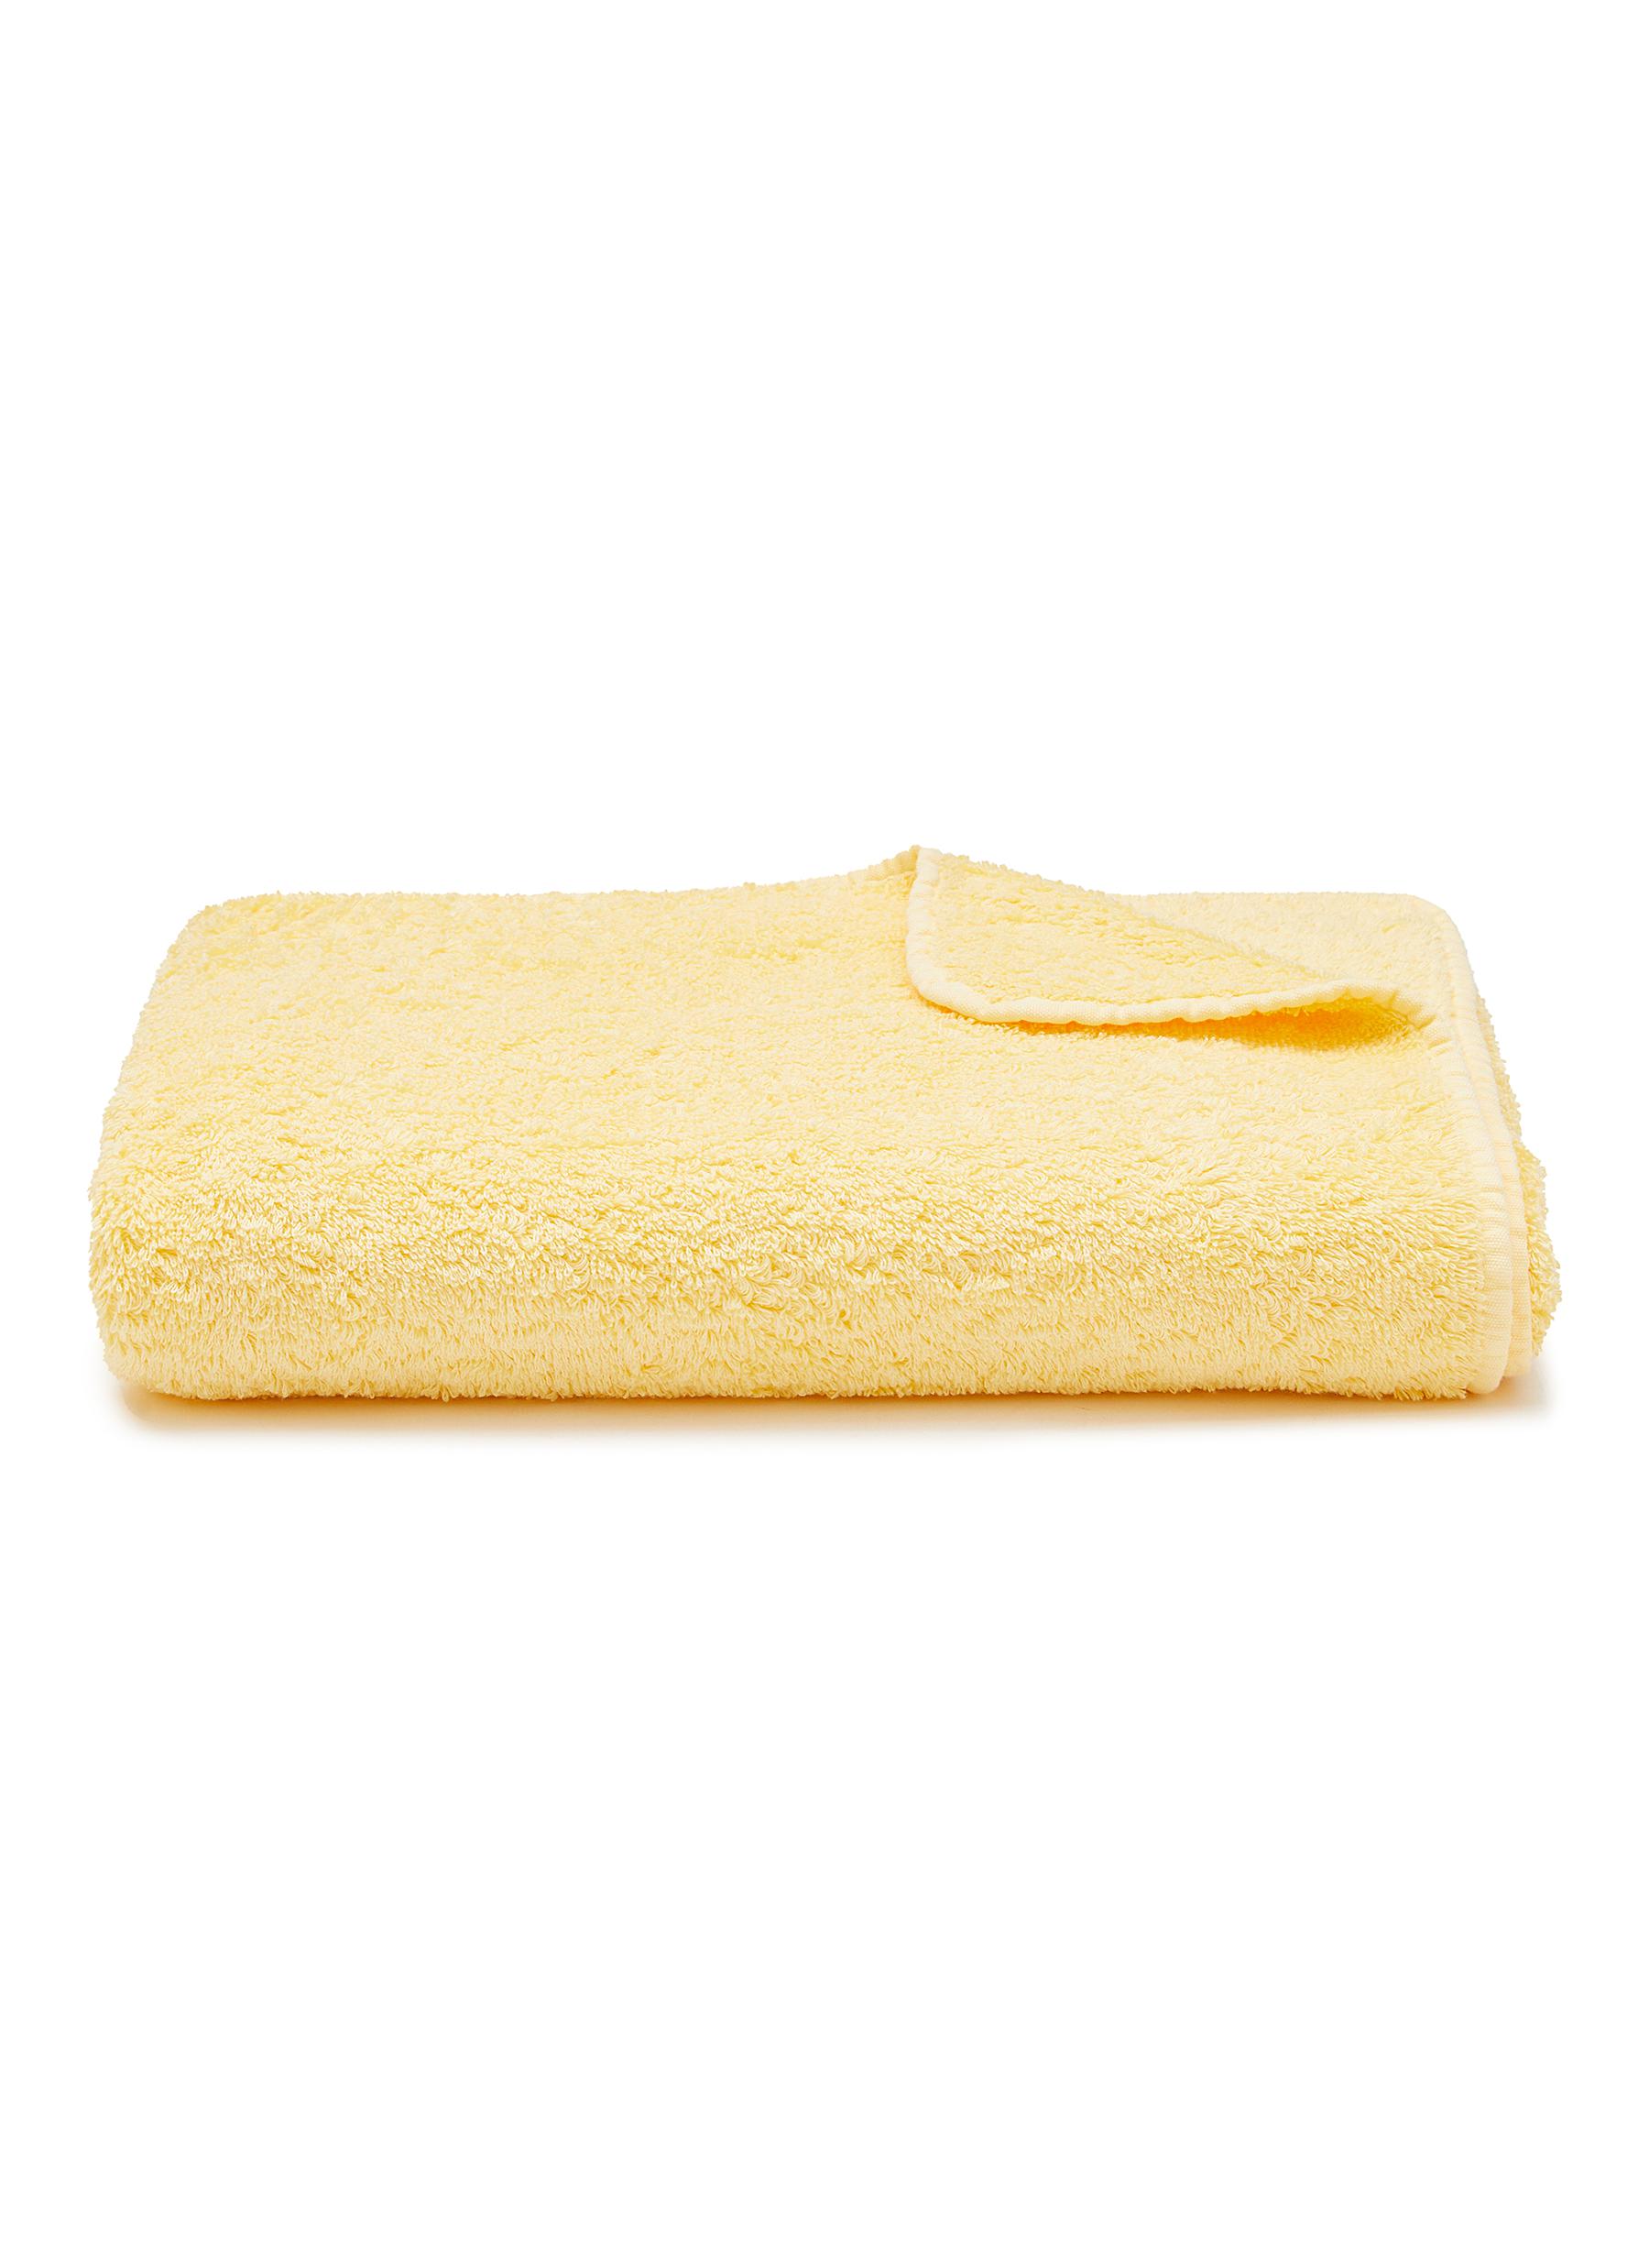 Super Pile Bath Towel - Popcorn